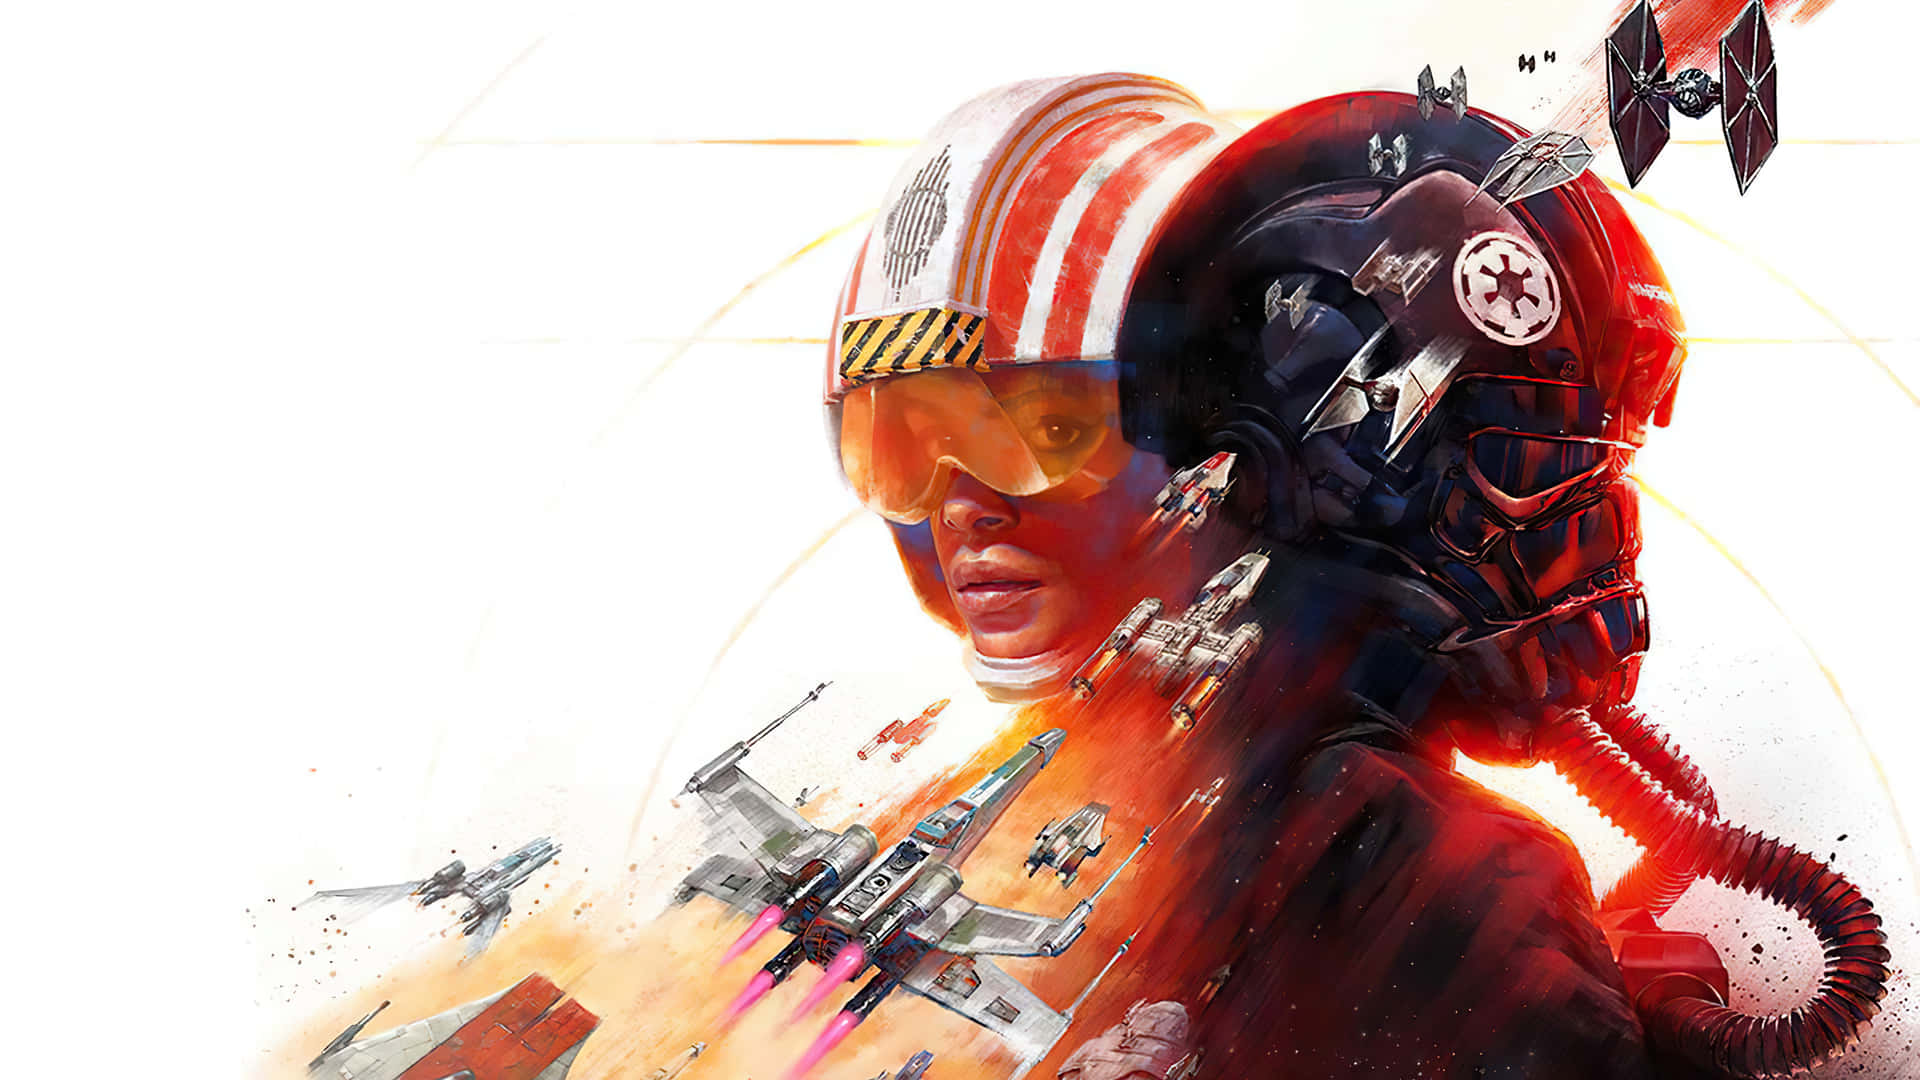 Futuristic Sci-Fi Game Universe Wallpaper